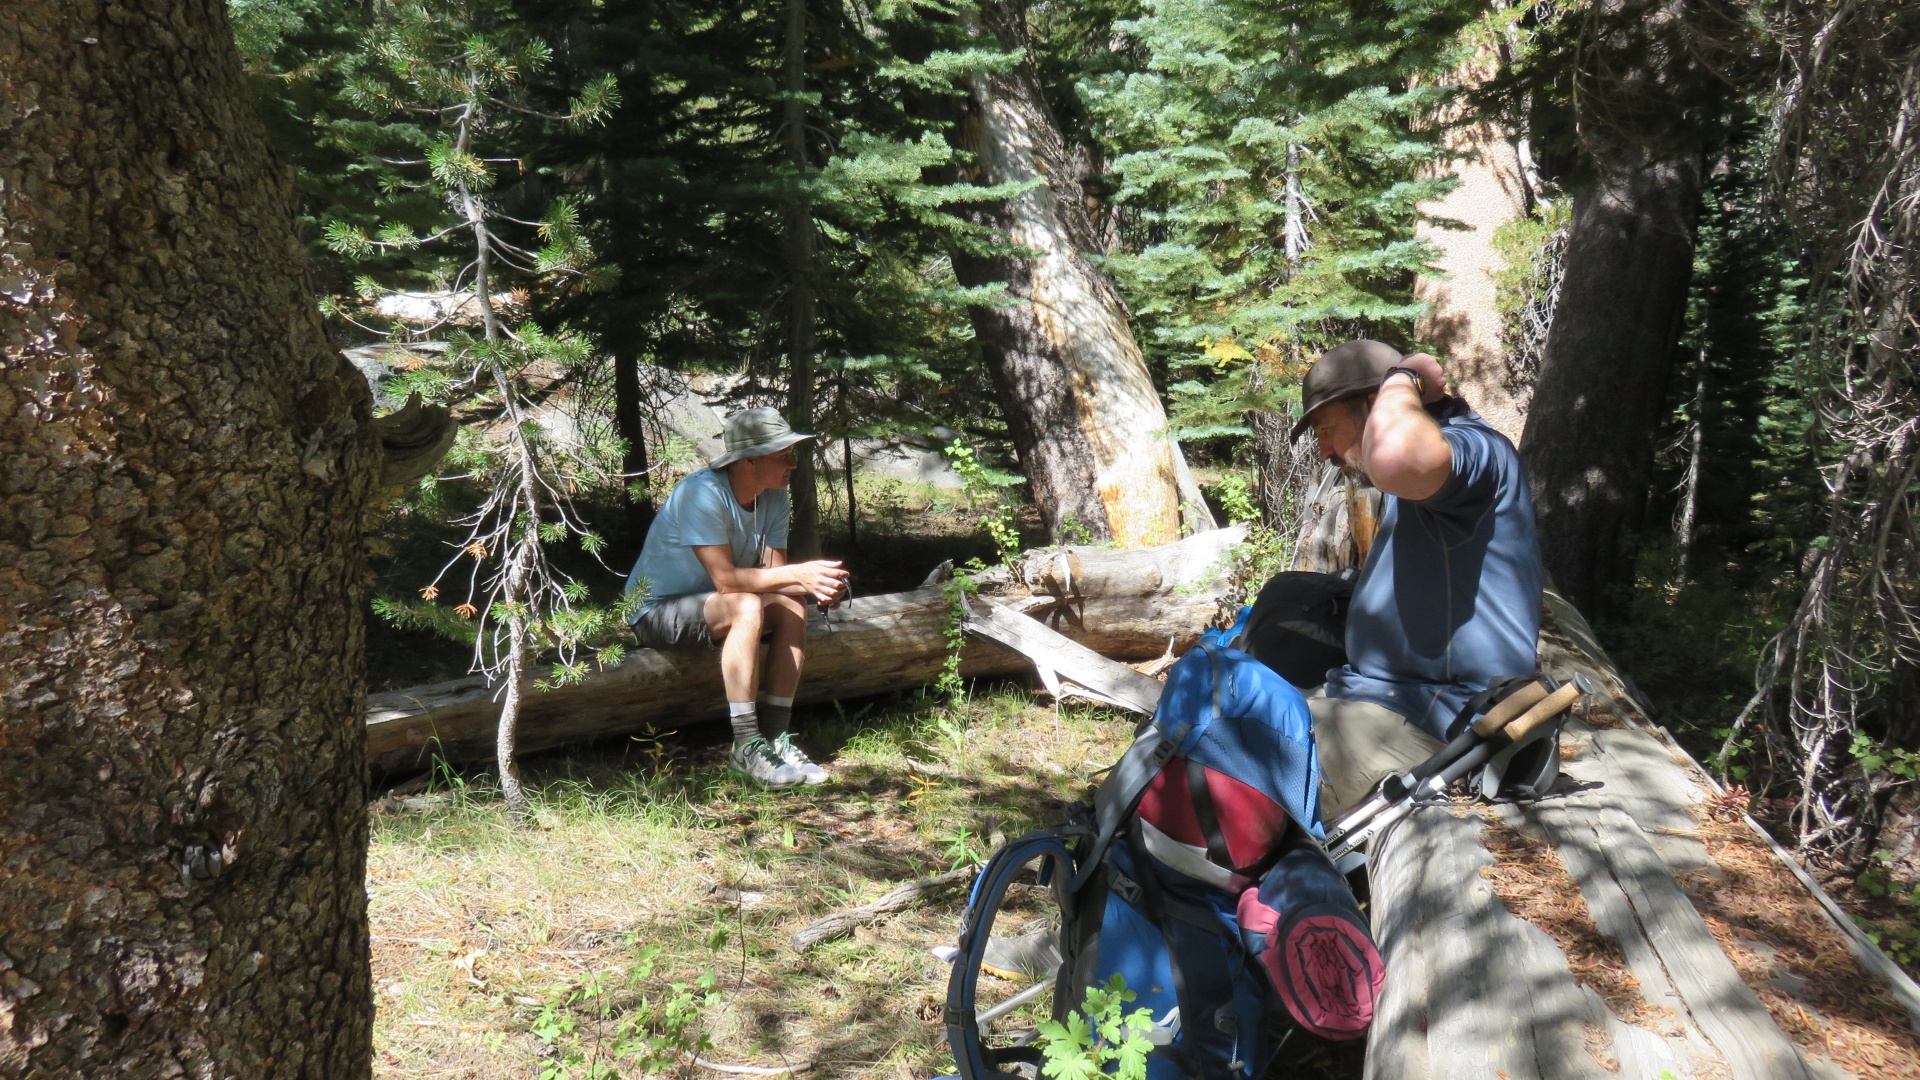 john muir trail ansel adams wilderness tuolumne meadows 2016 trip report